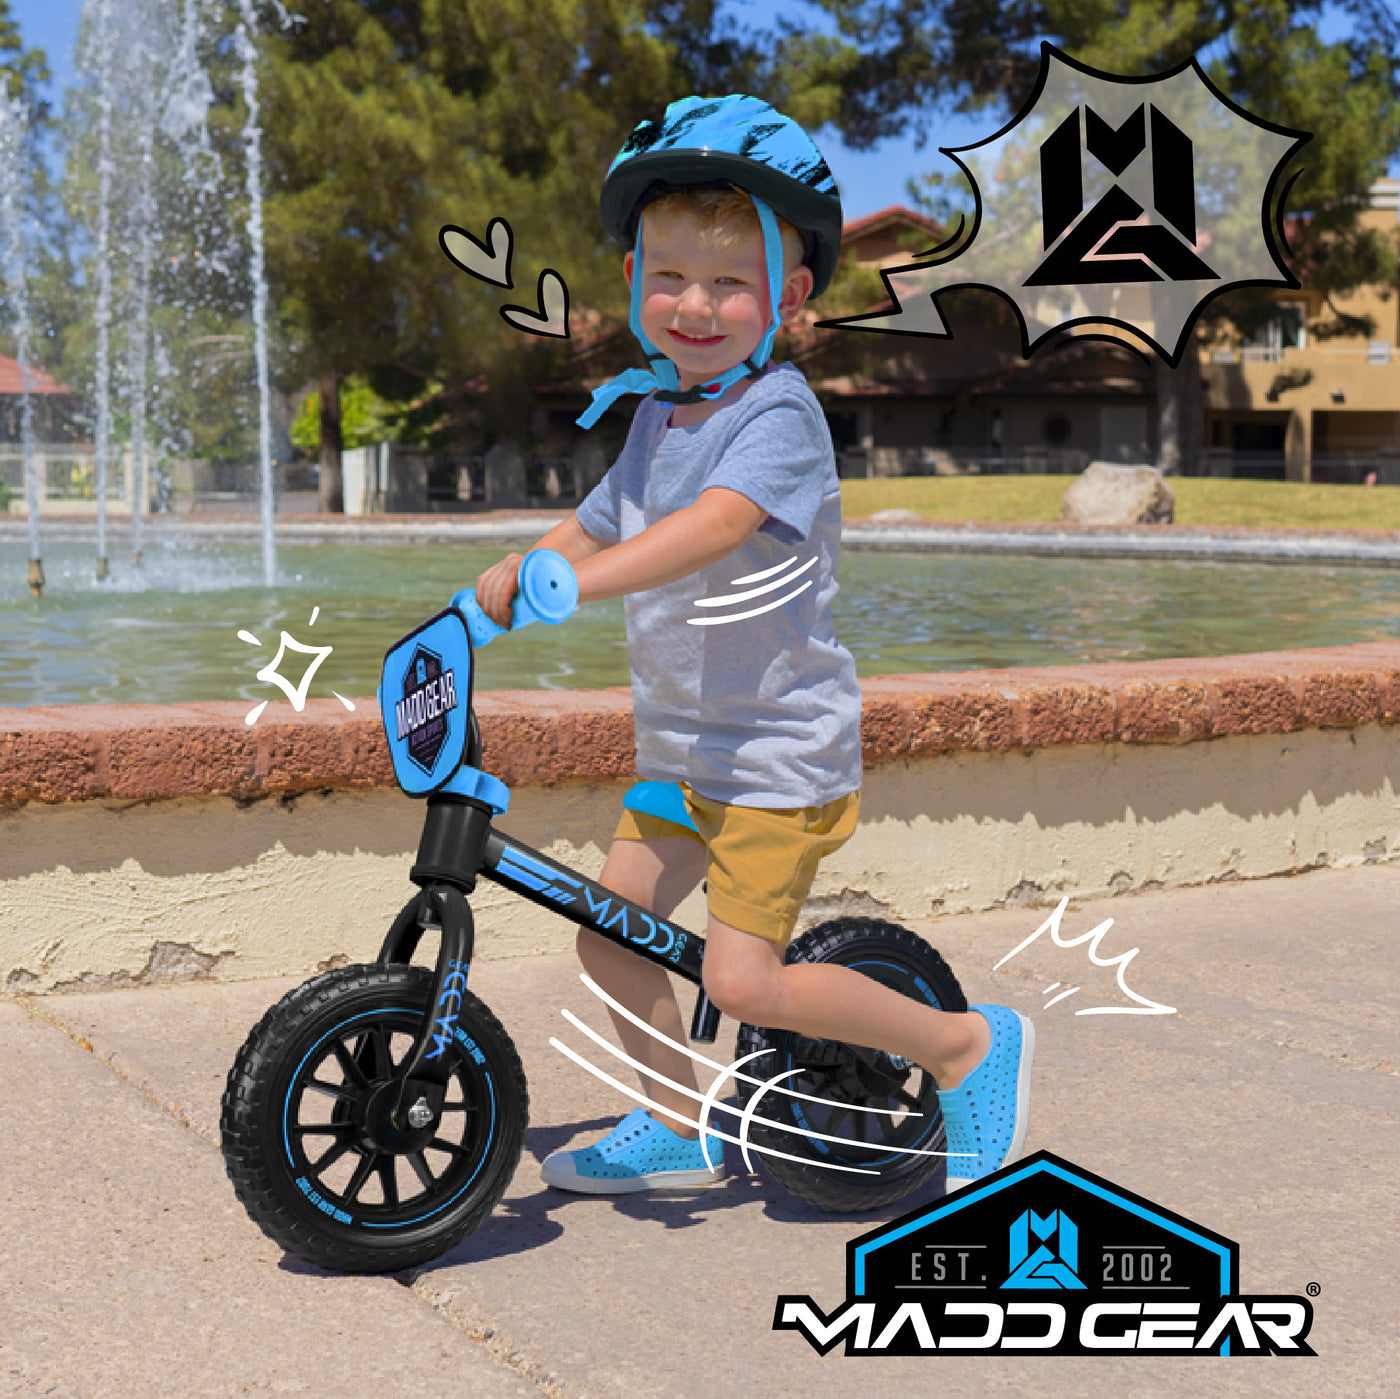 Madd Gear MGP BMX Trainer Running BMX Strider Balance Bike Kids Toddler Boys Girls High Quality Black Blue